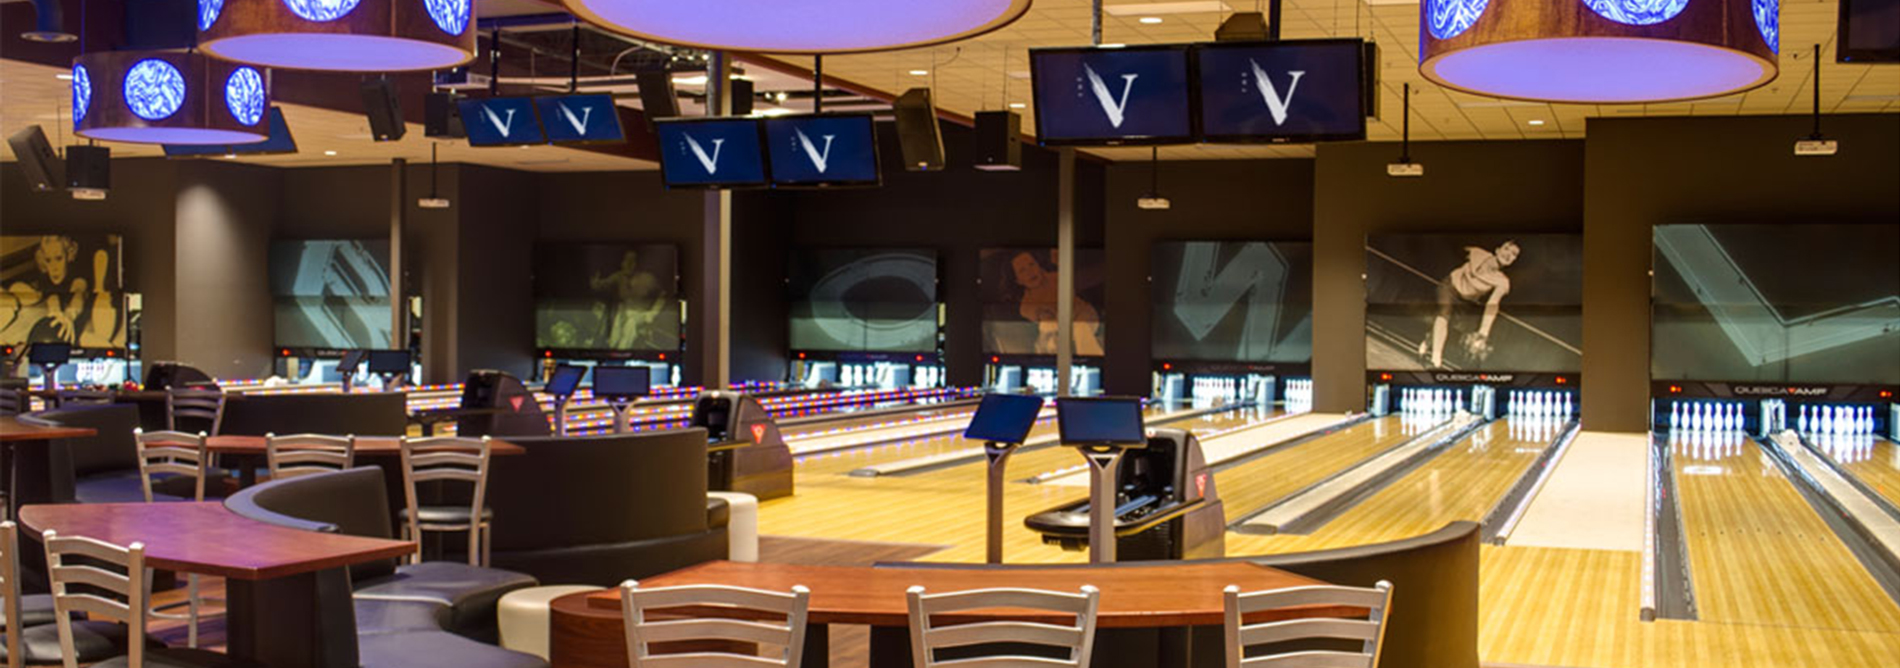 QUBICAAMF-bowling-hybrid-the-V-banner.jpg